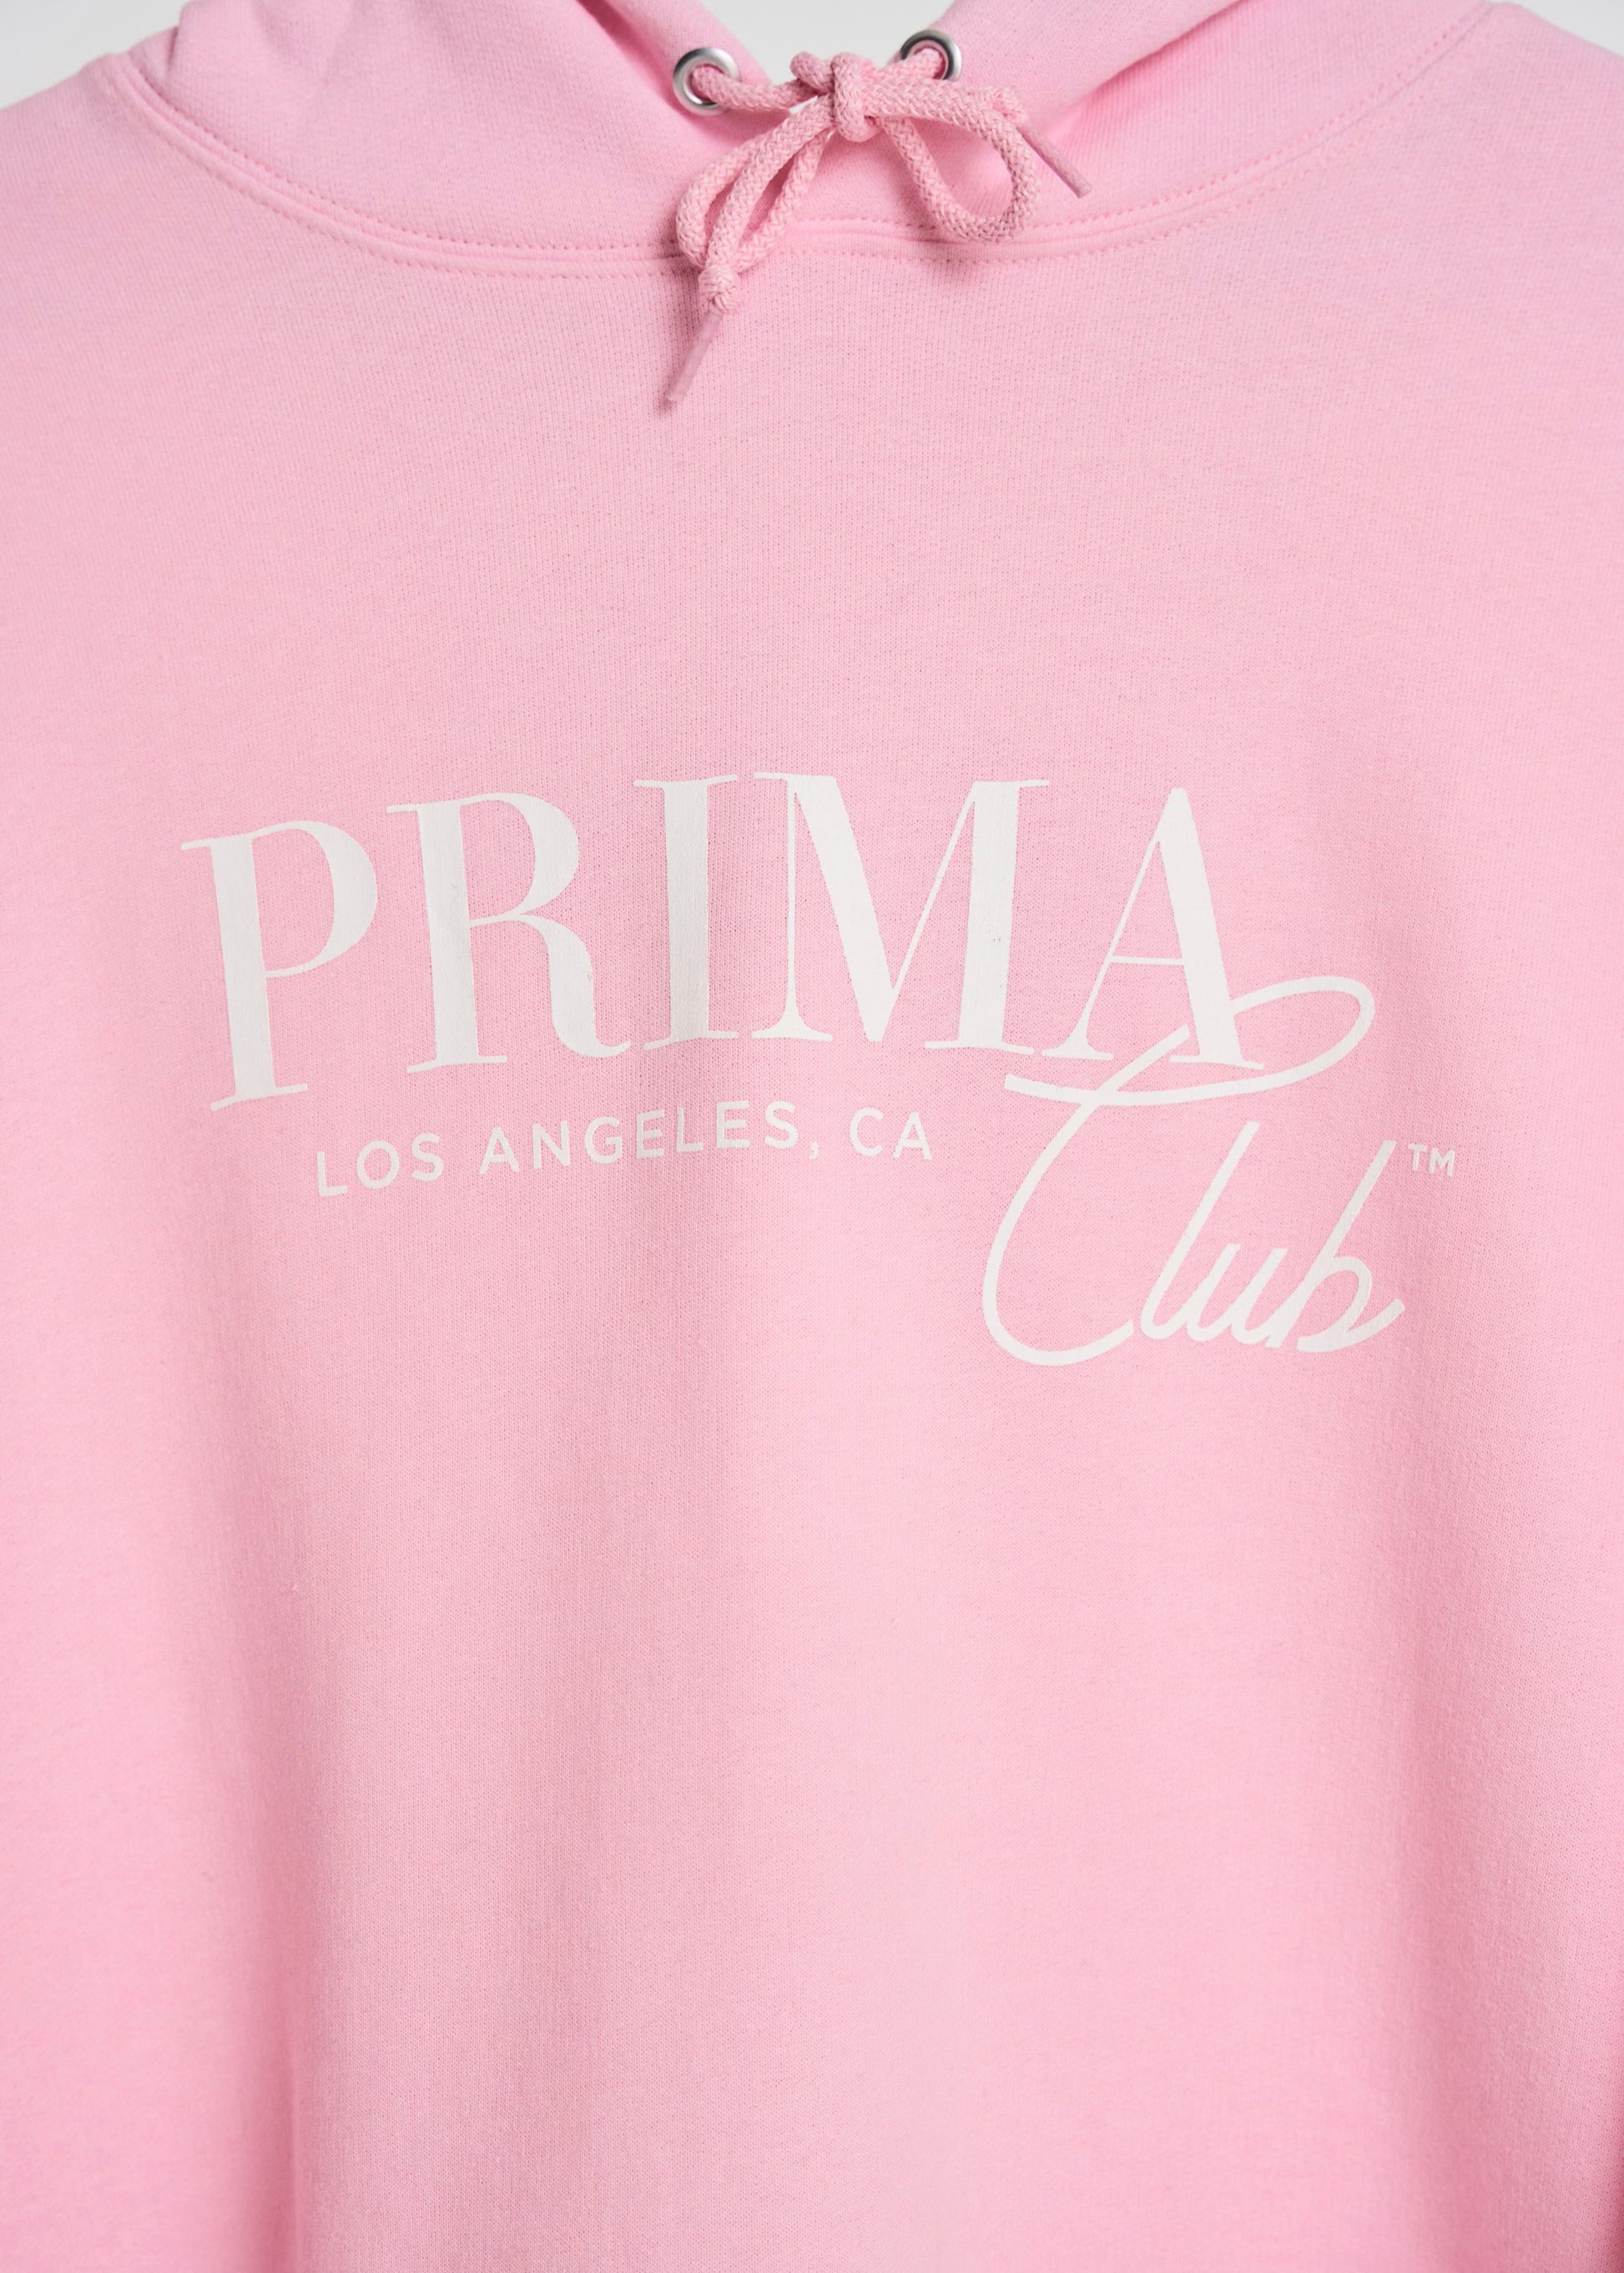 Ballet hoodie – The Prima Club